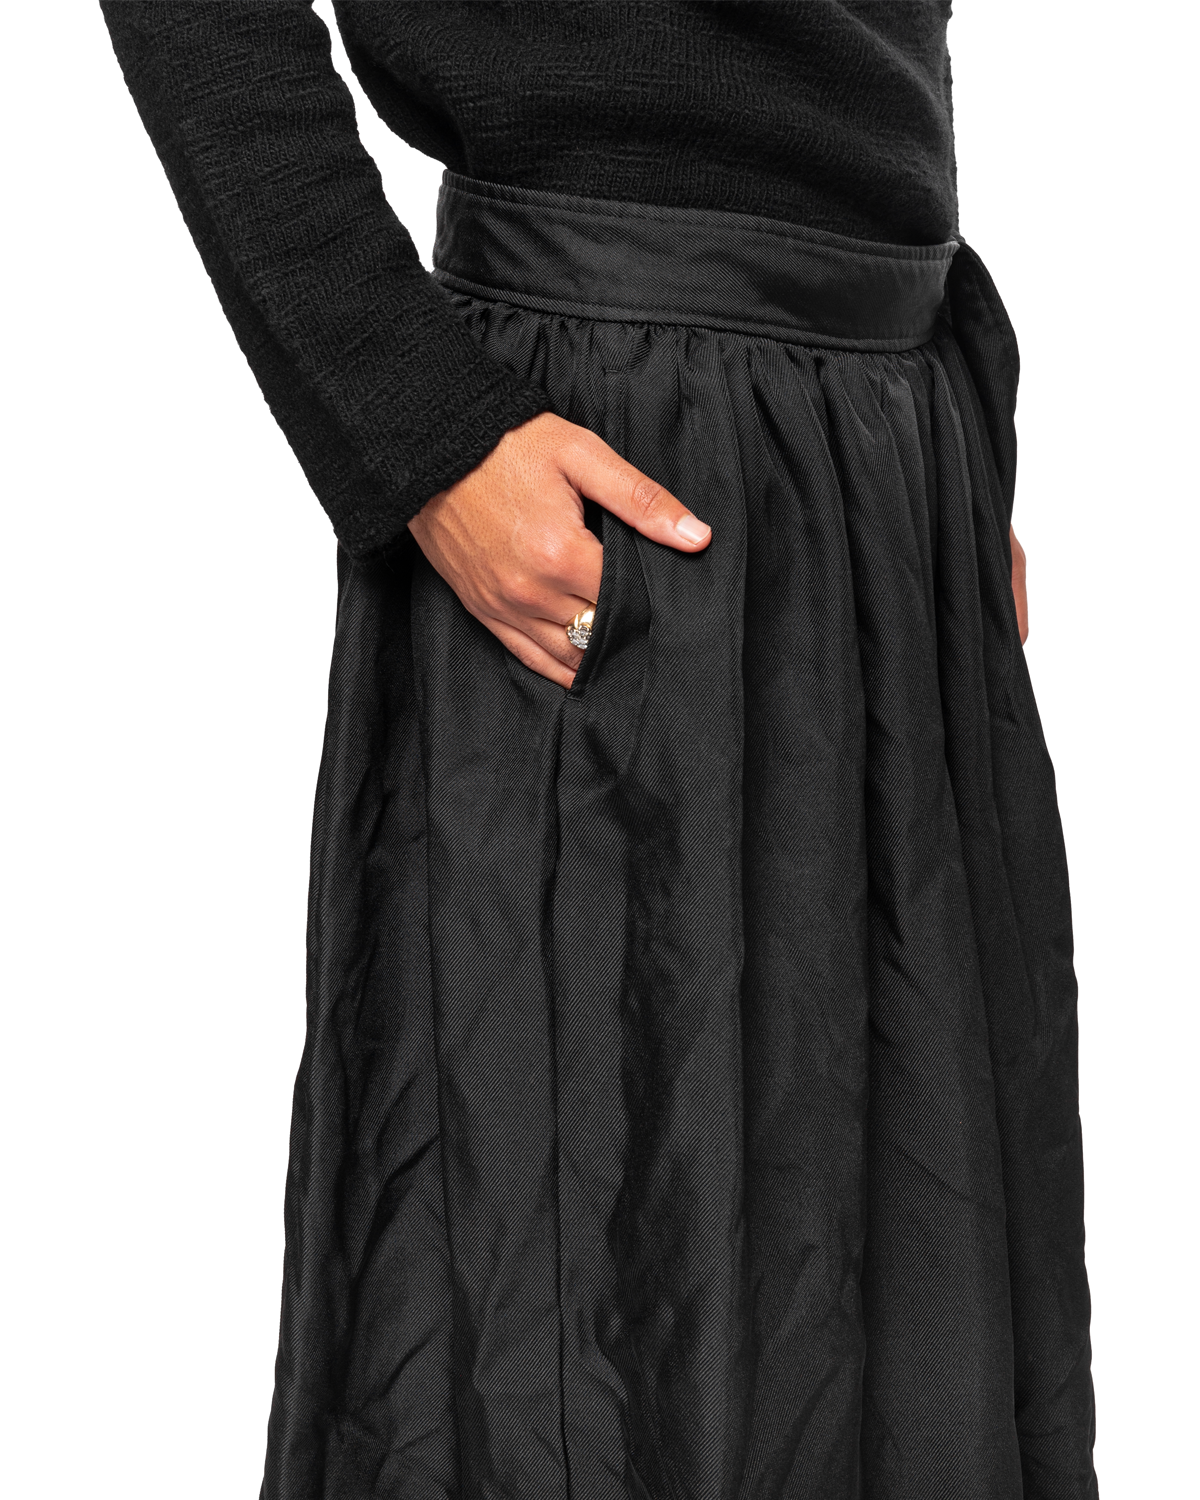 Single Shoulder-Strap Draped Skirt Black